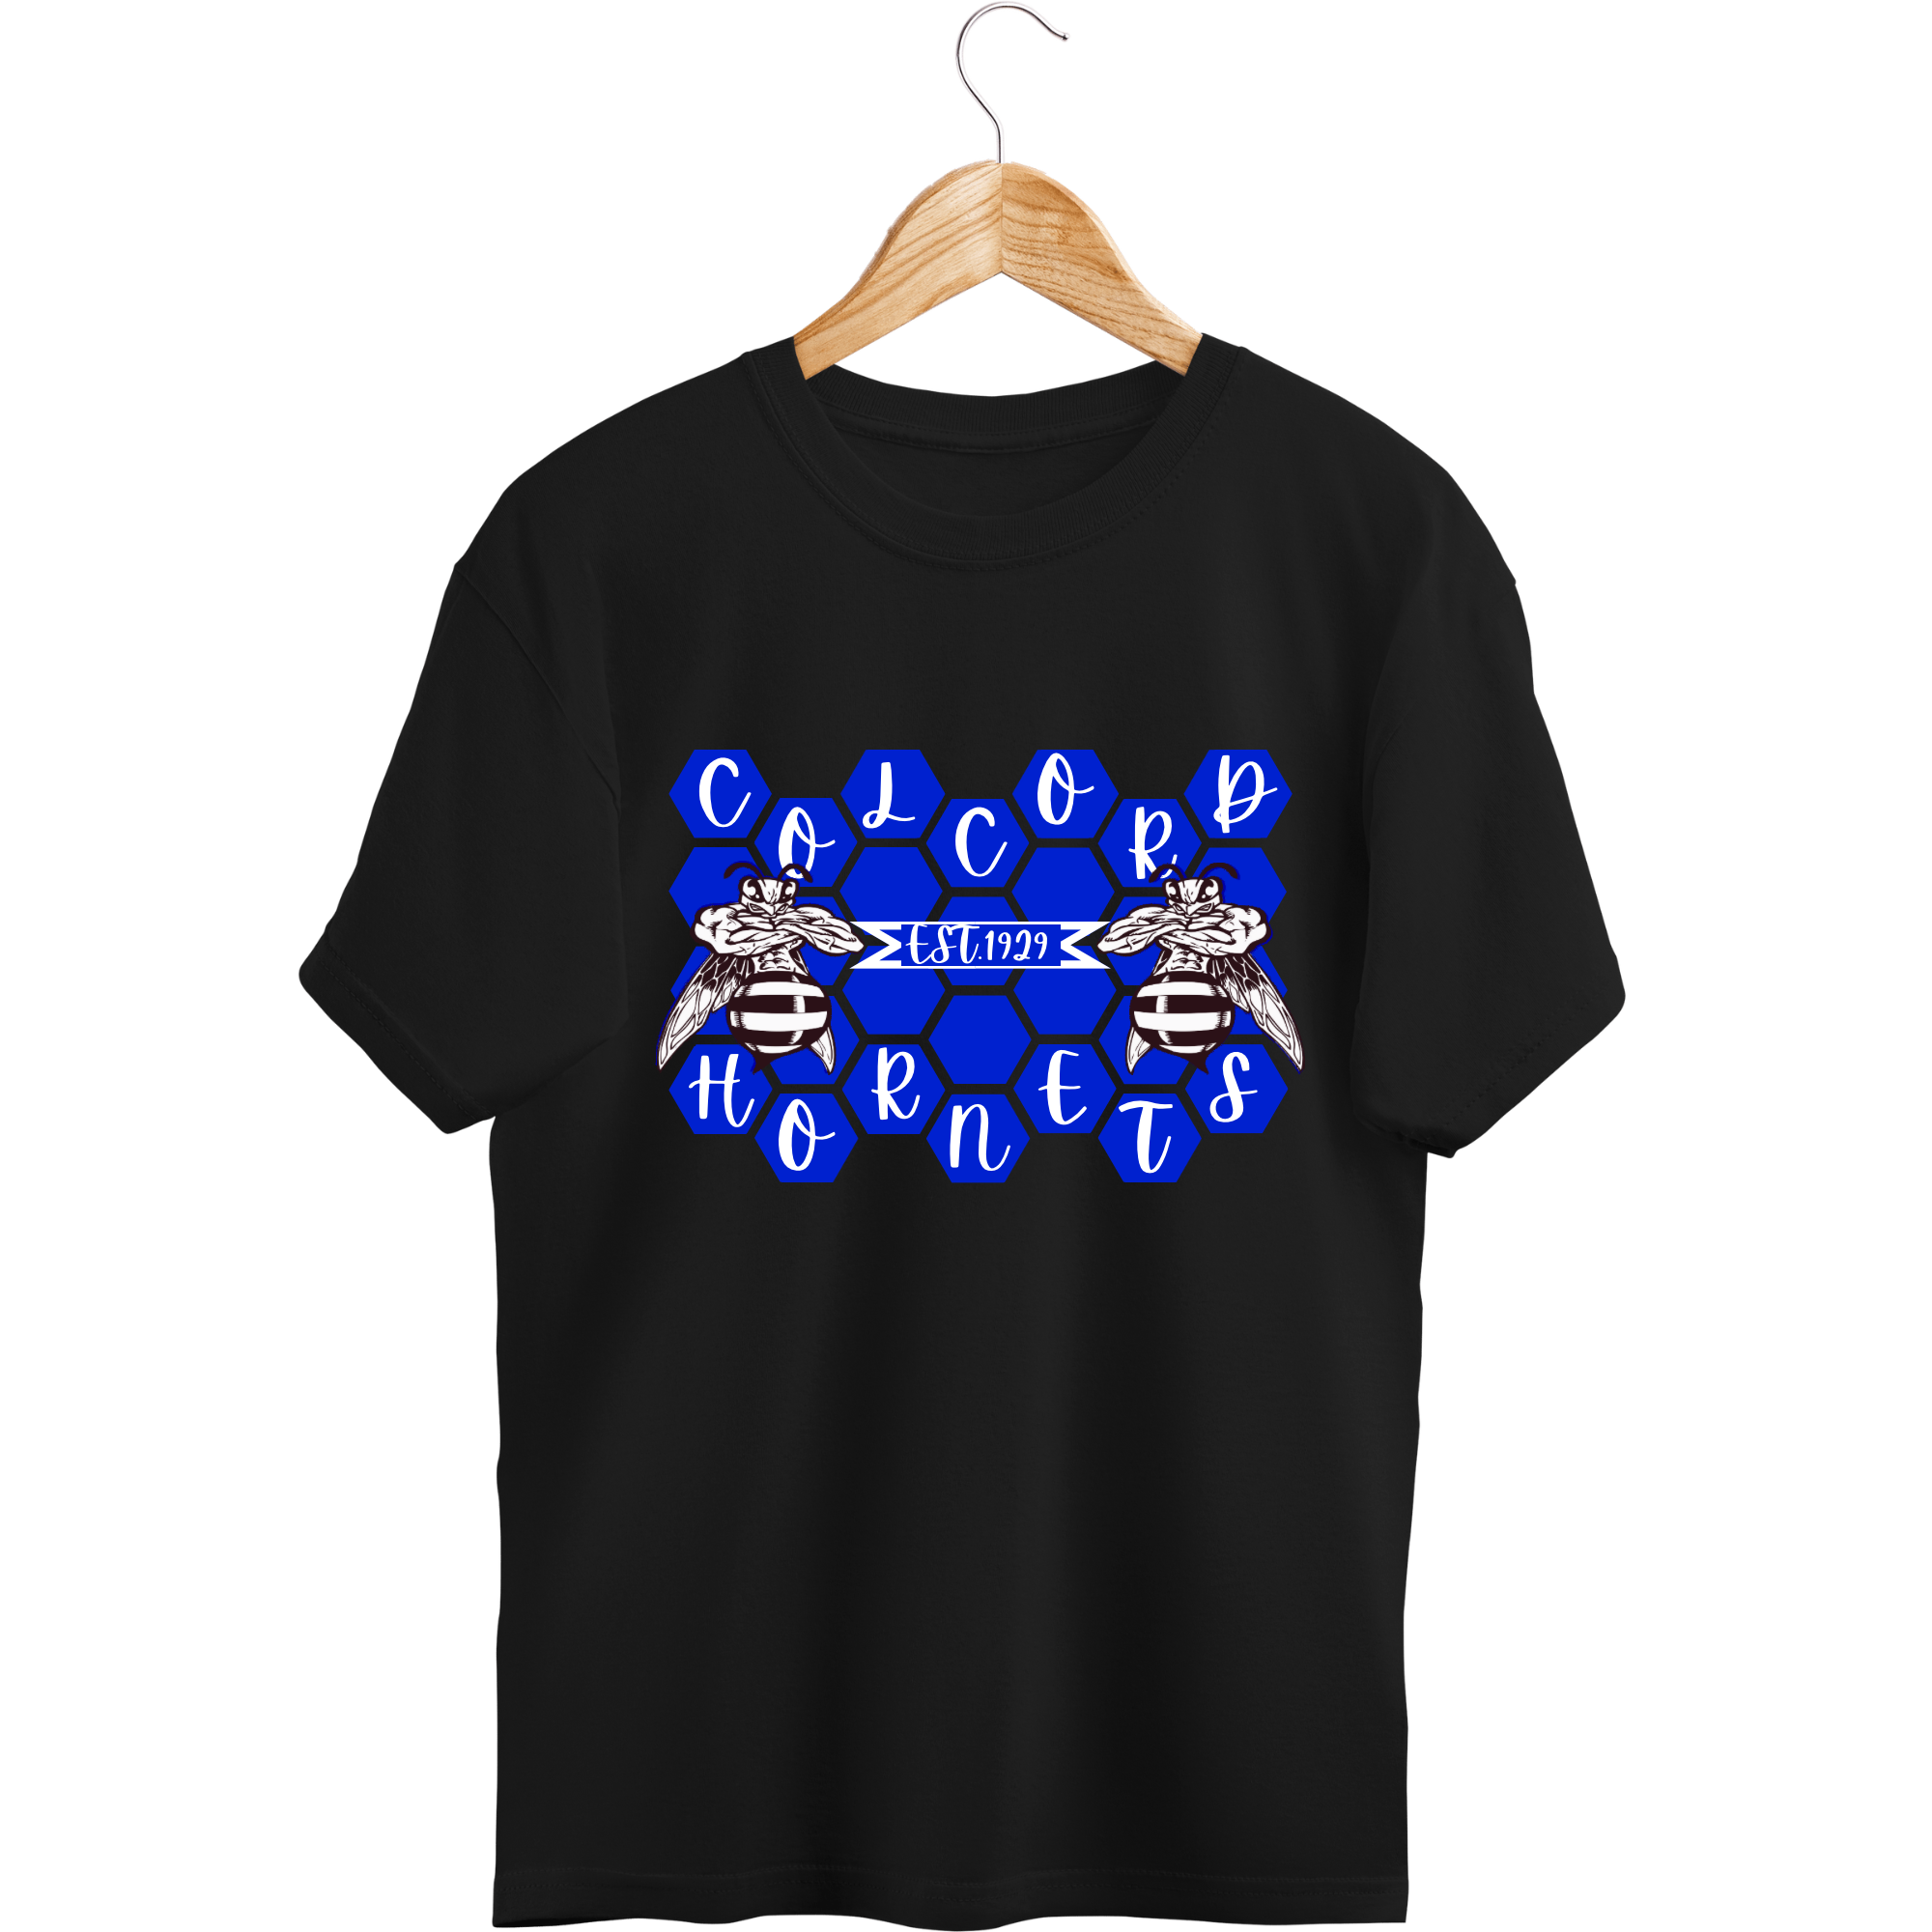 Colcord Hive Design T-Shirt